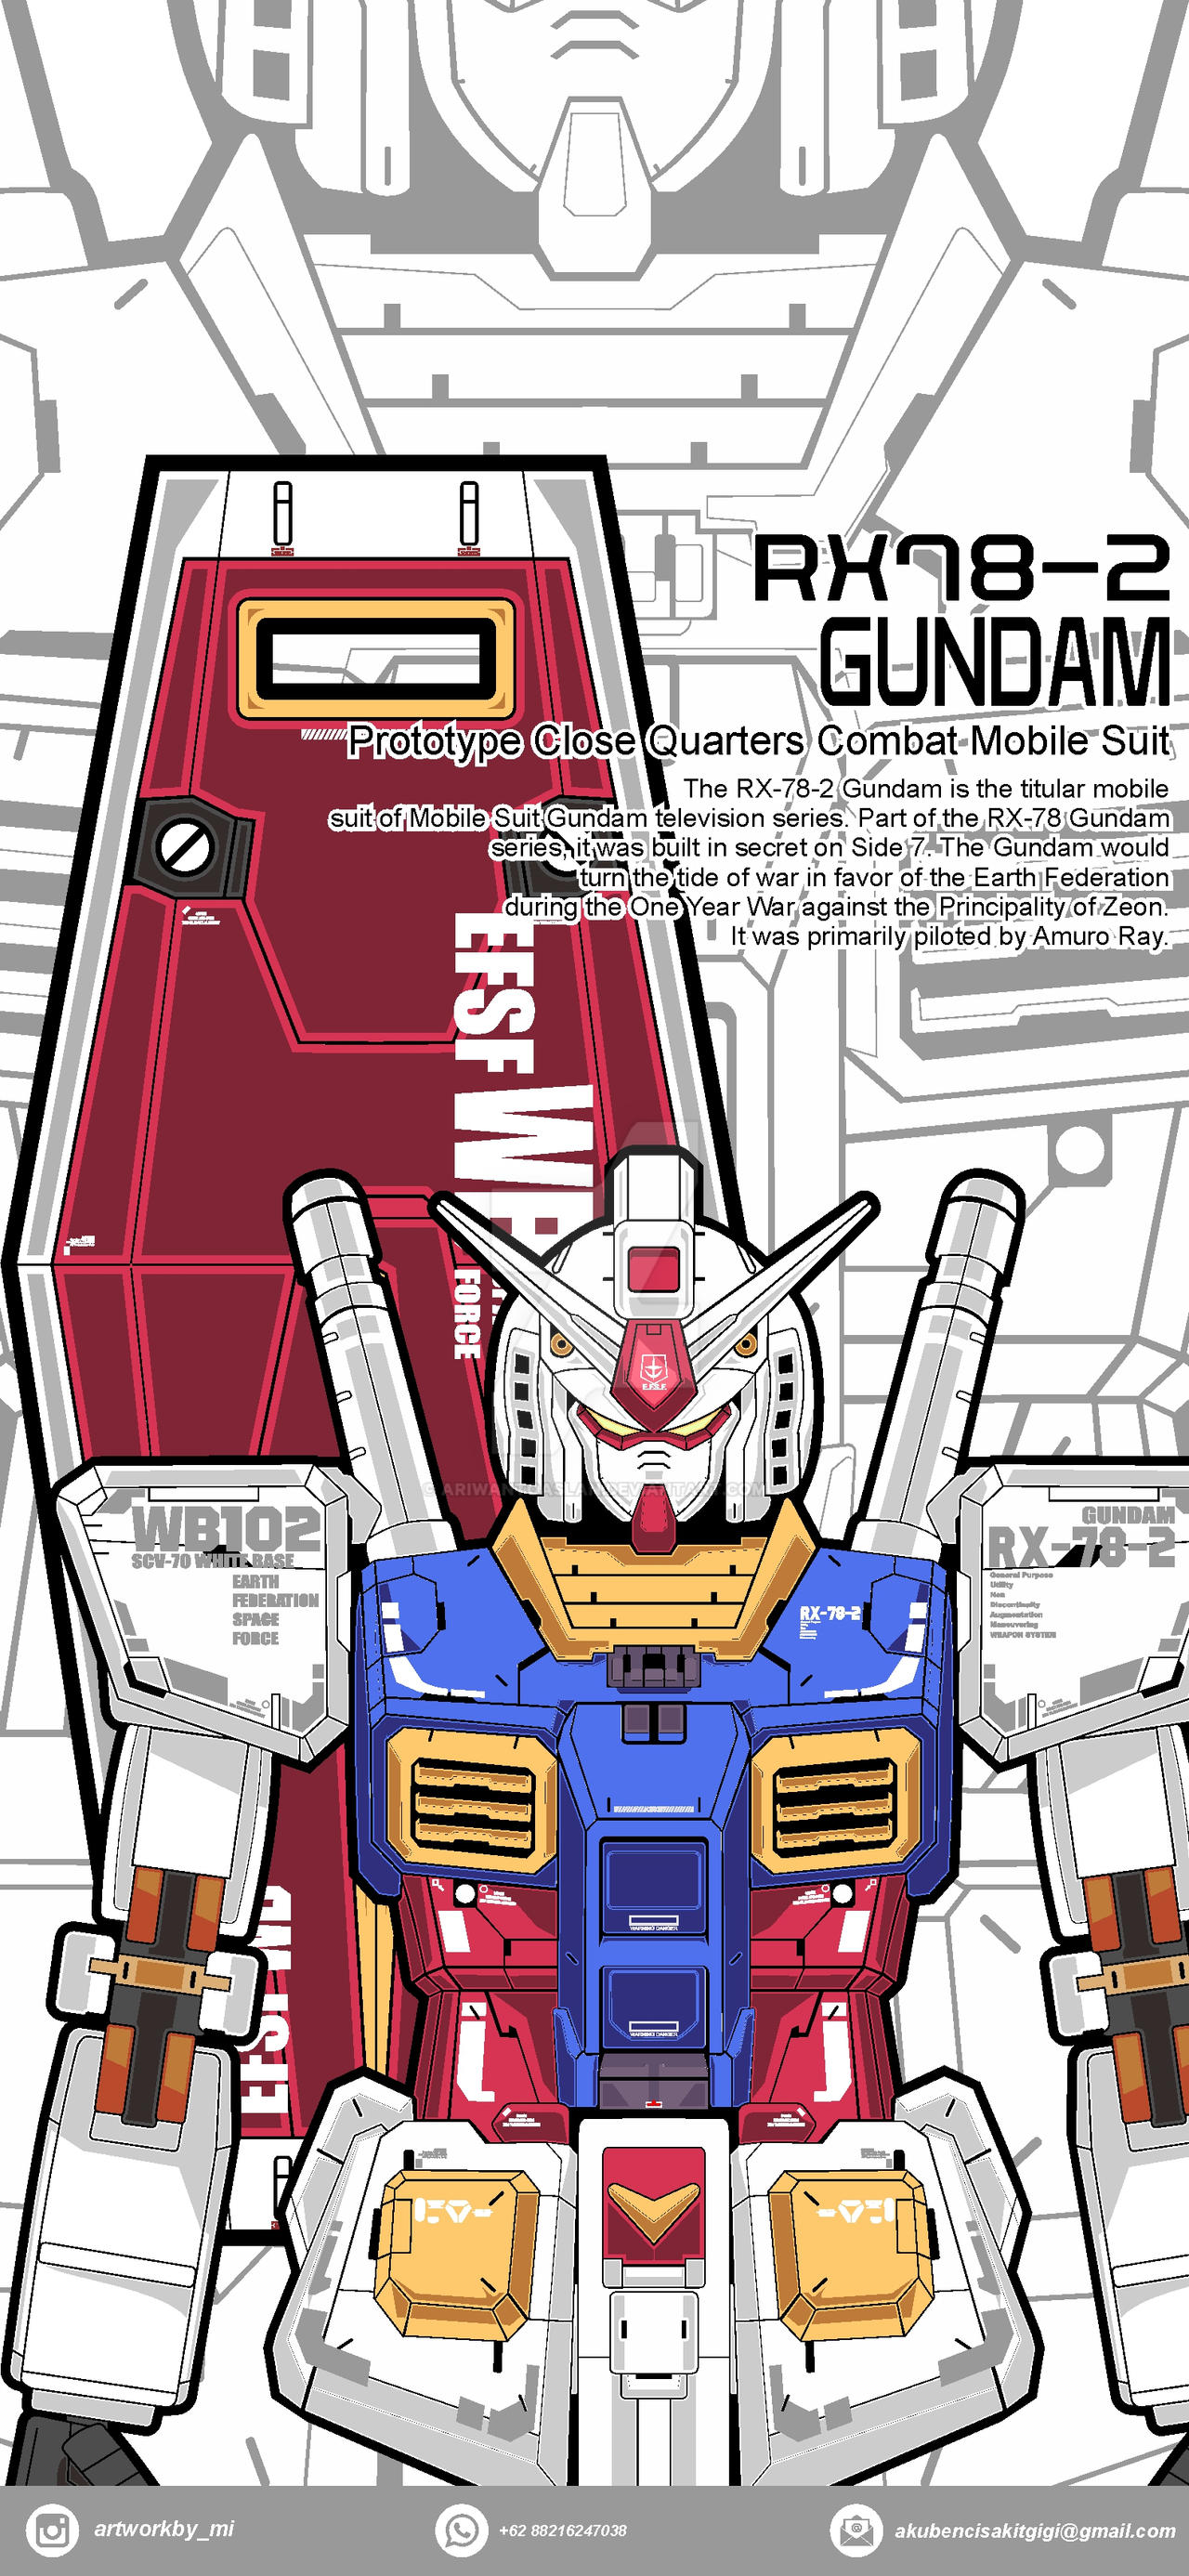 Wallpaper HD Gundam Rx78 By Ariwantoaslan